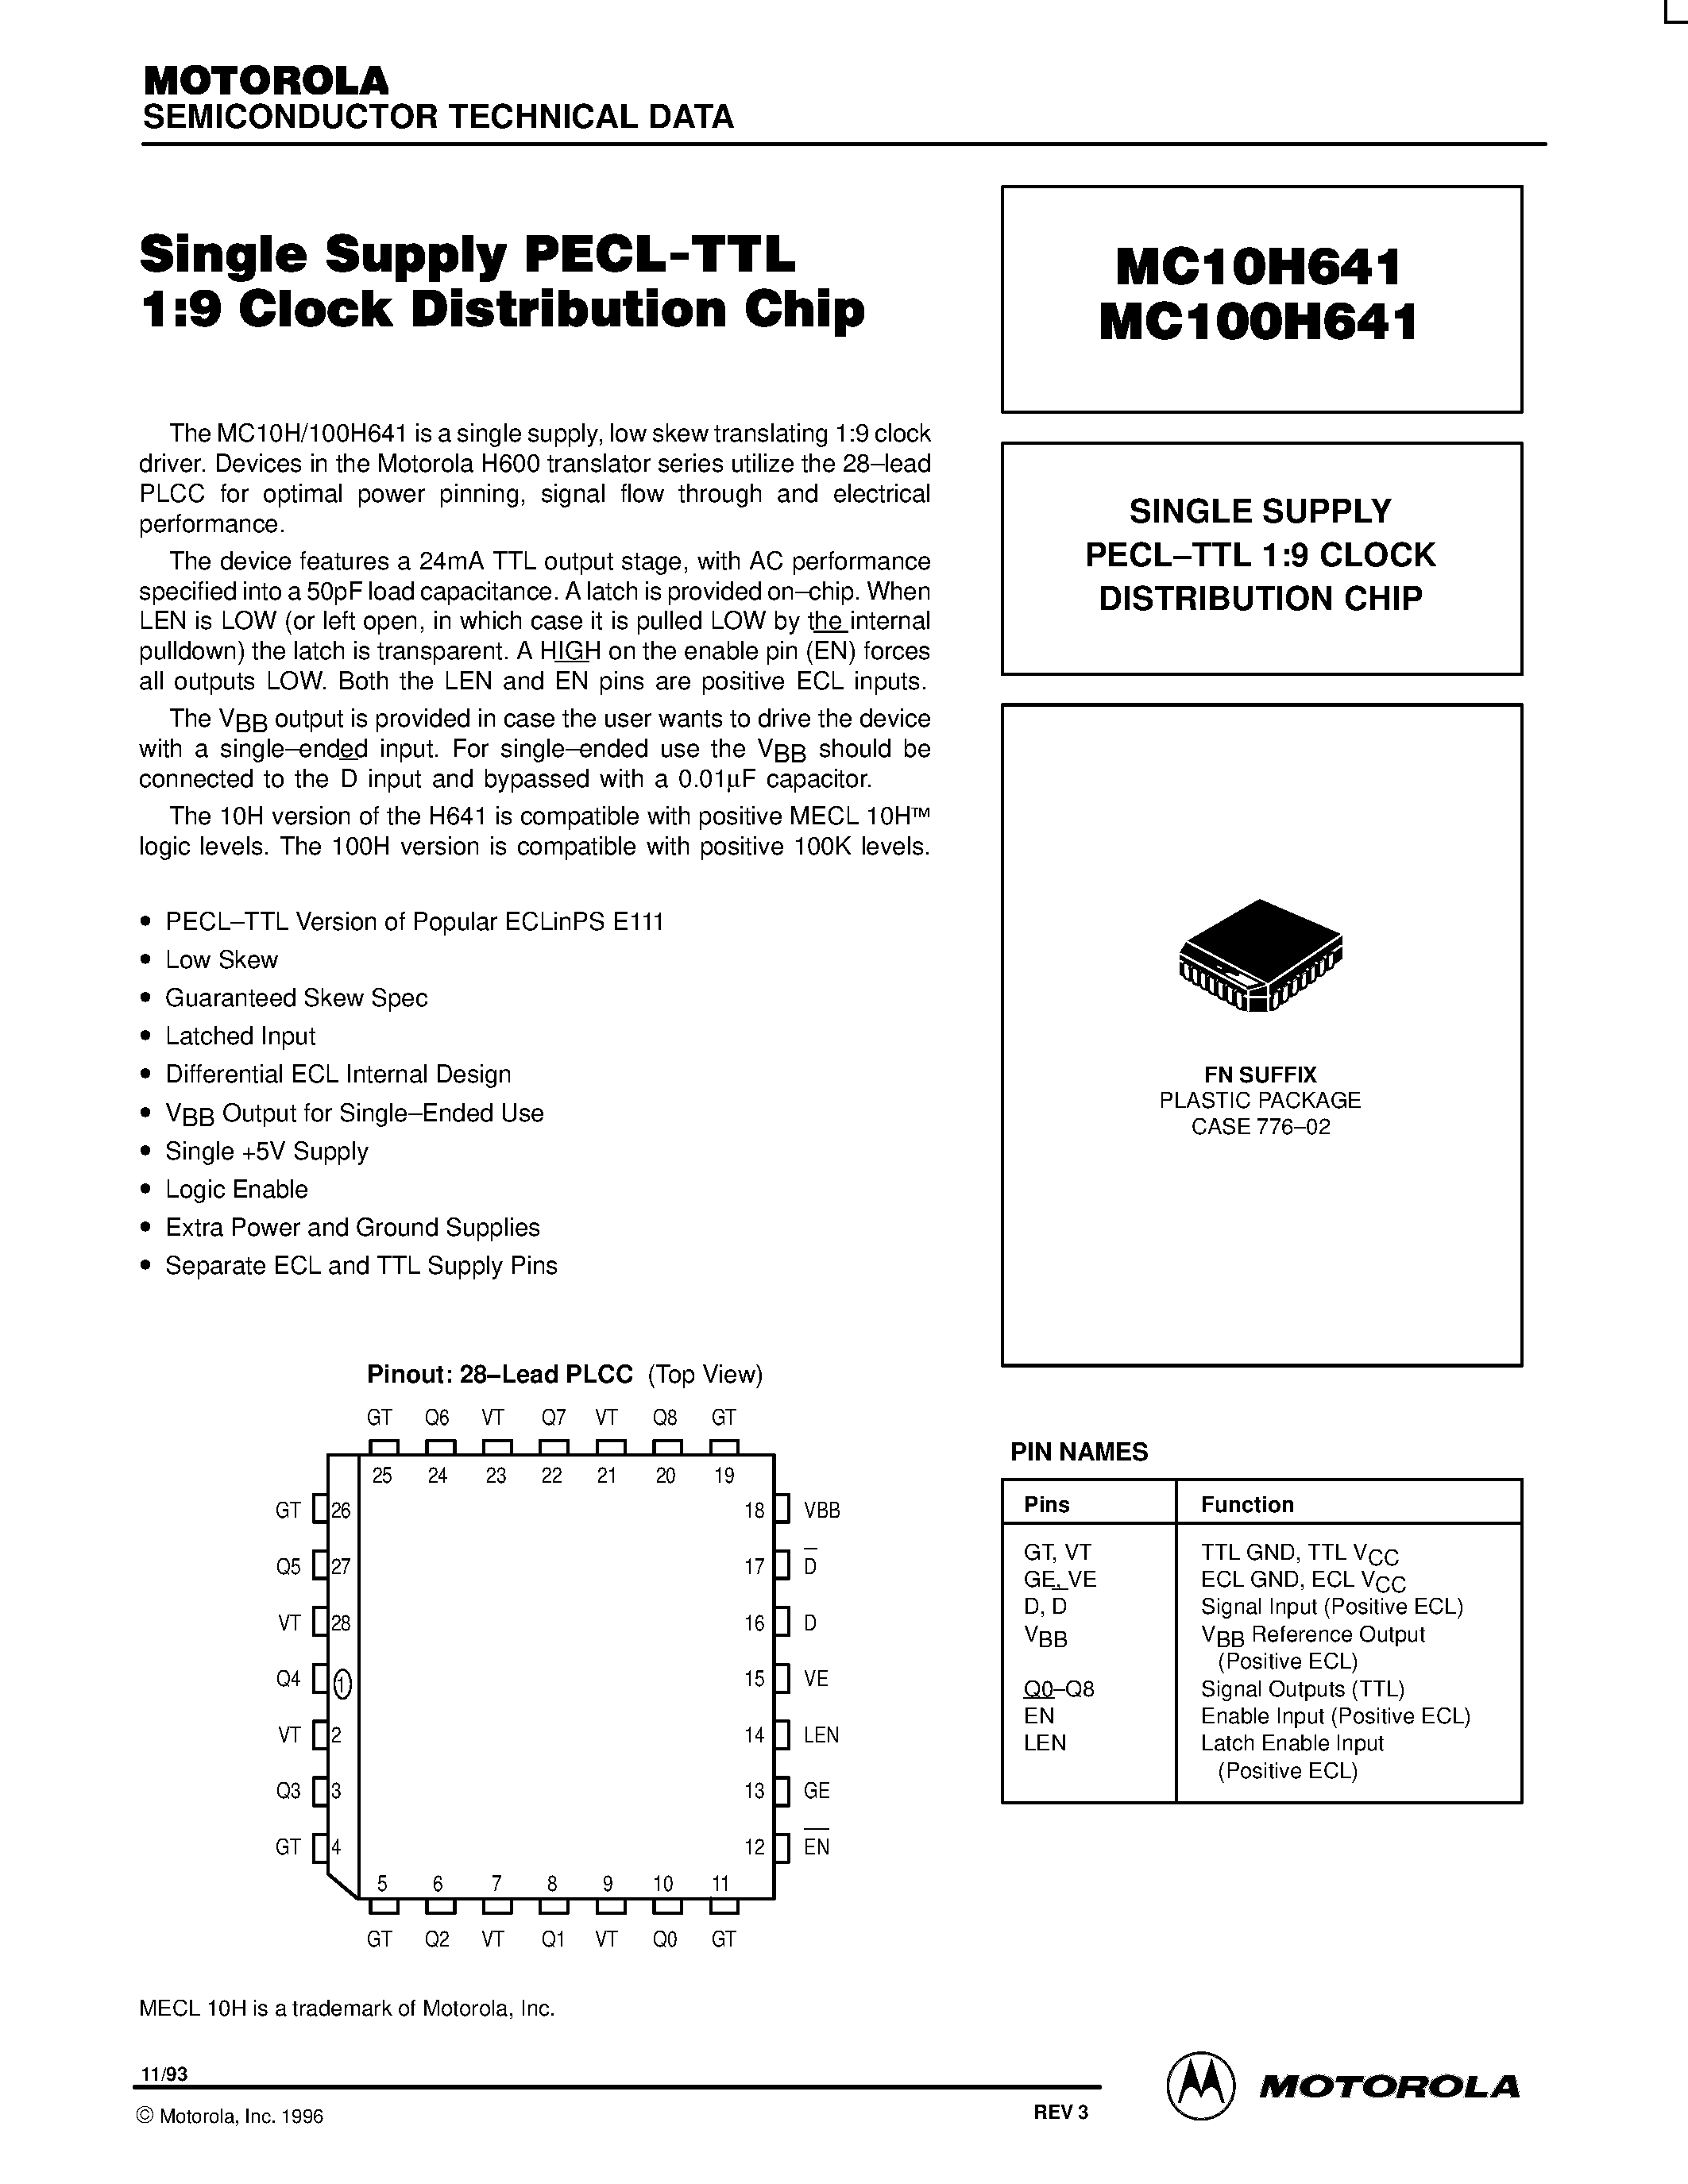 Datasheet MC10H641FN - SINGLE SUPPLY PECL-TTL 1:9 CLOCK DISTRIBUTION CHIP page 1